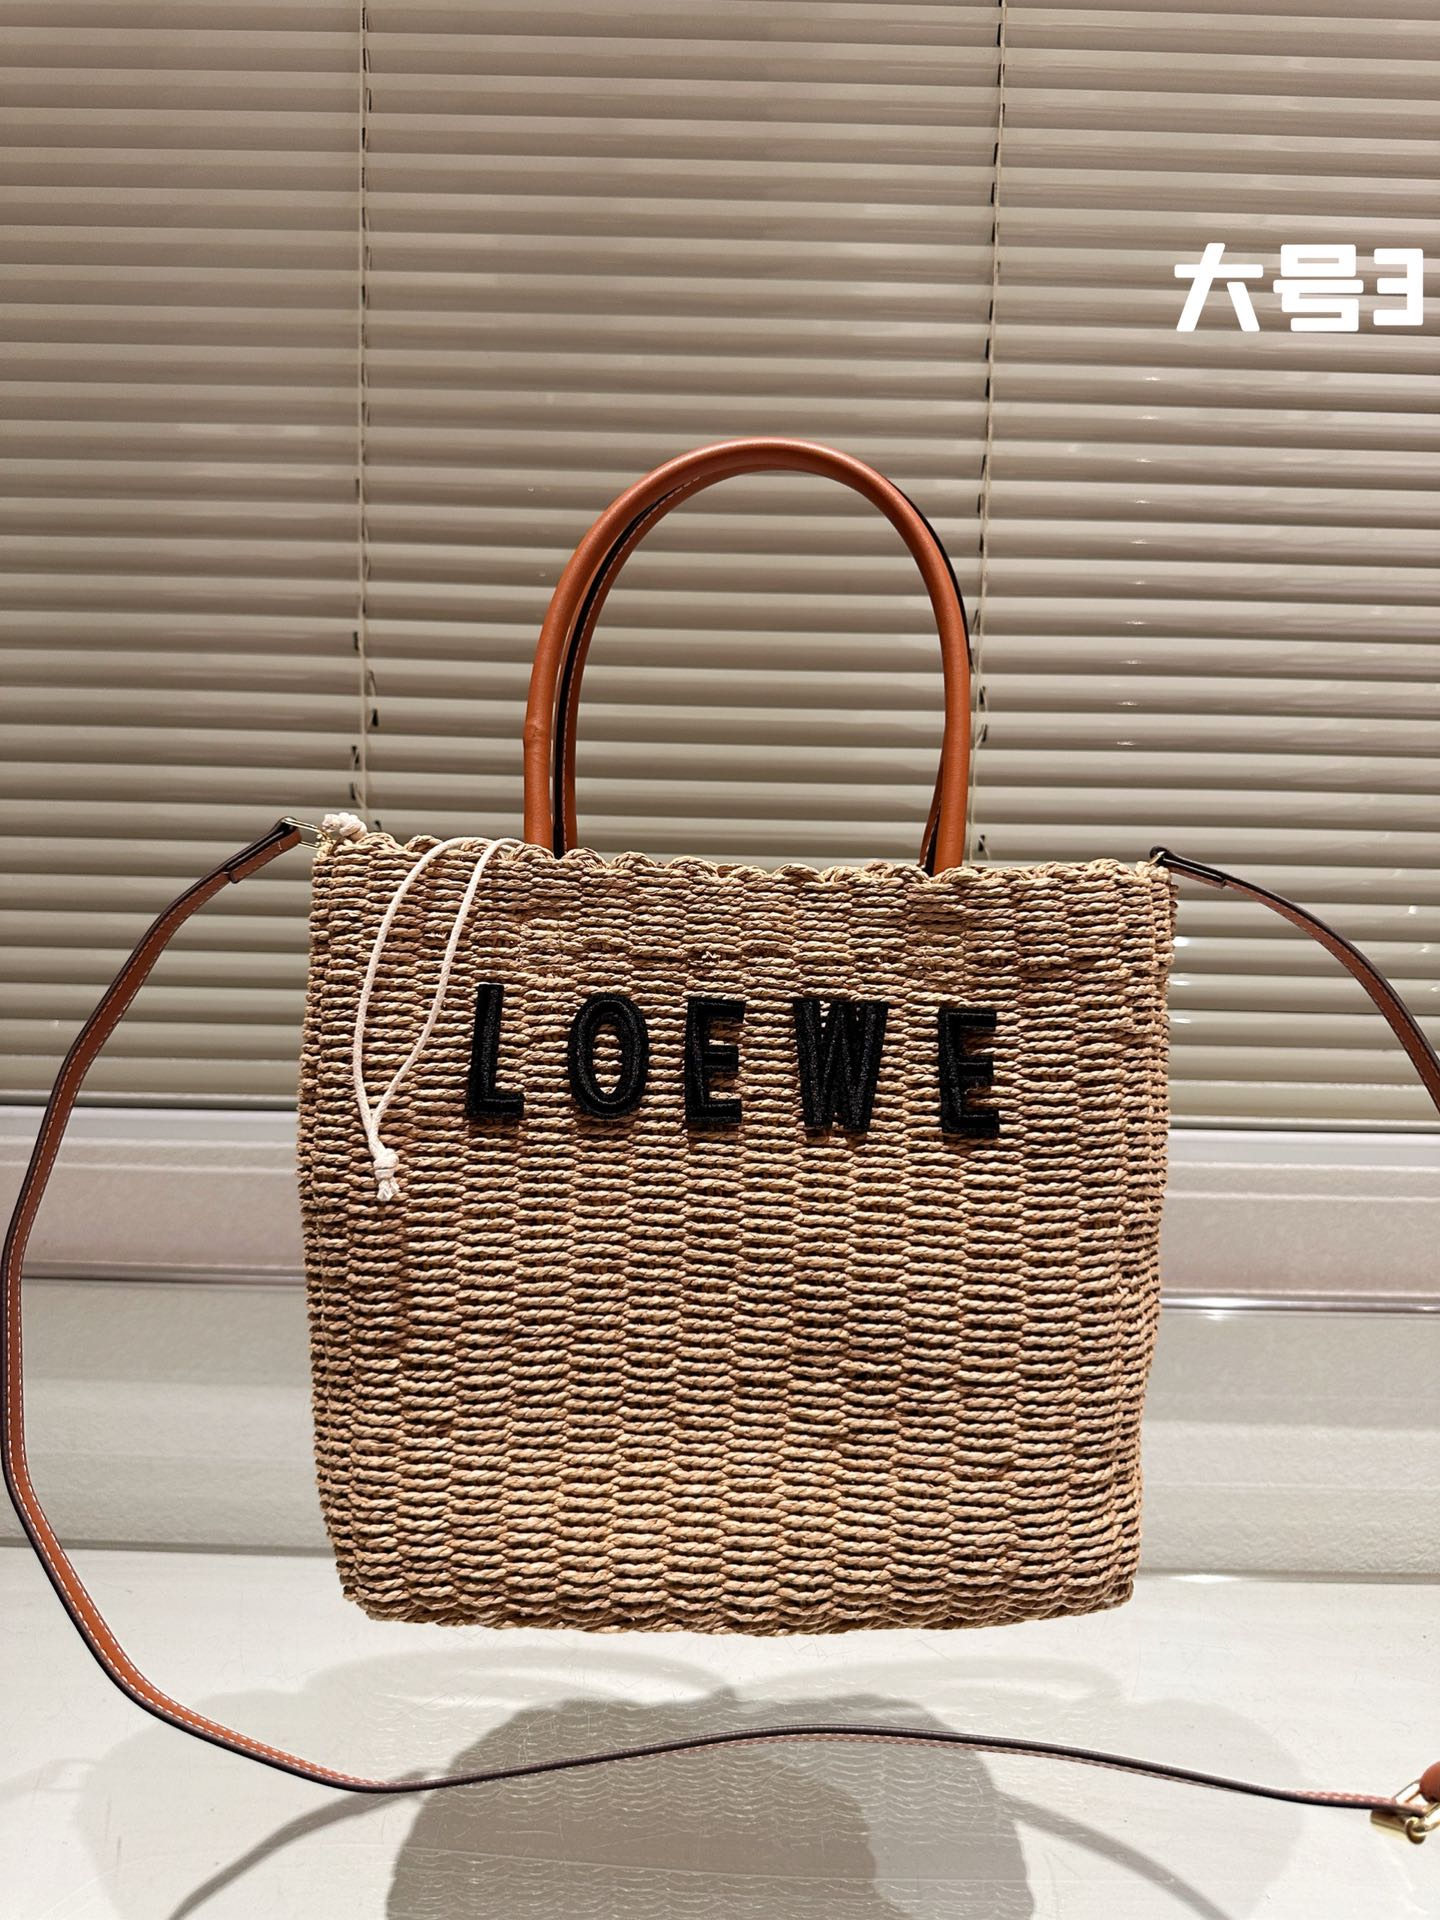 Loewe Bags Handbags Straw Woven Summer Collection